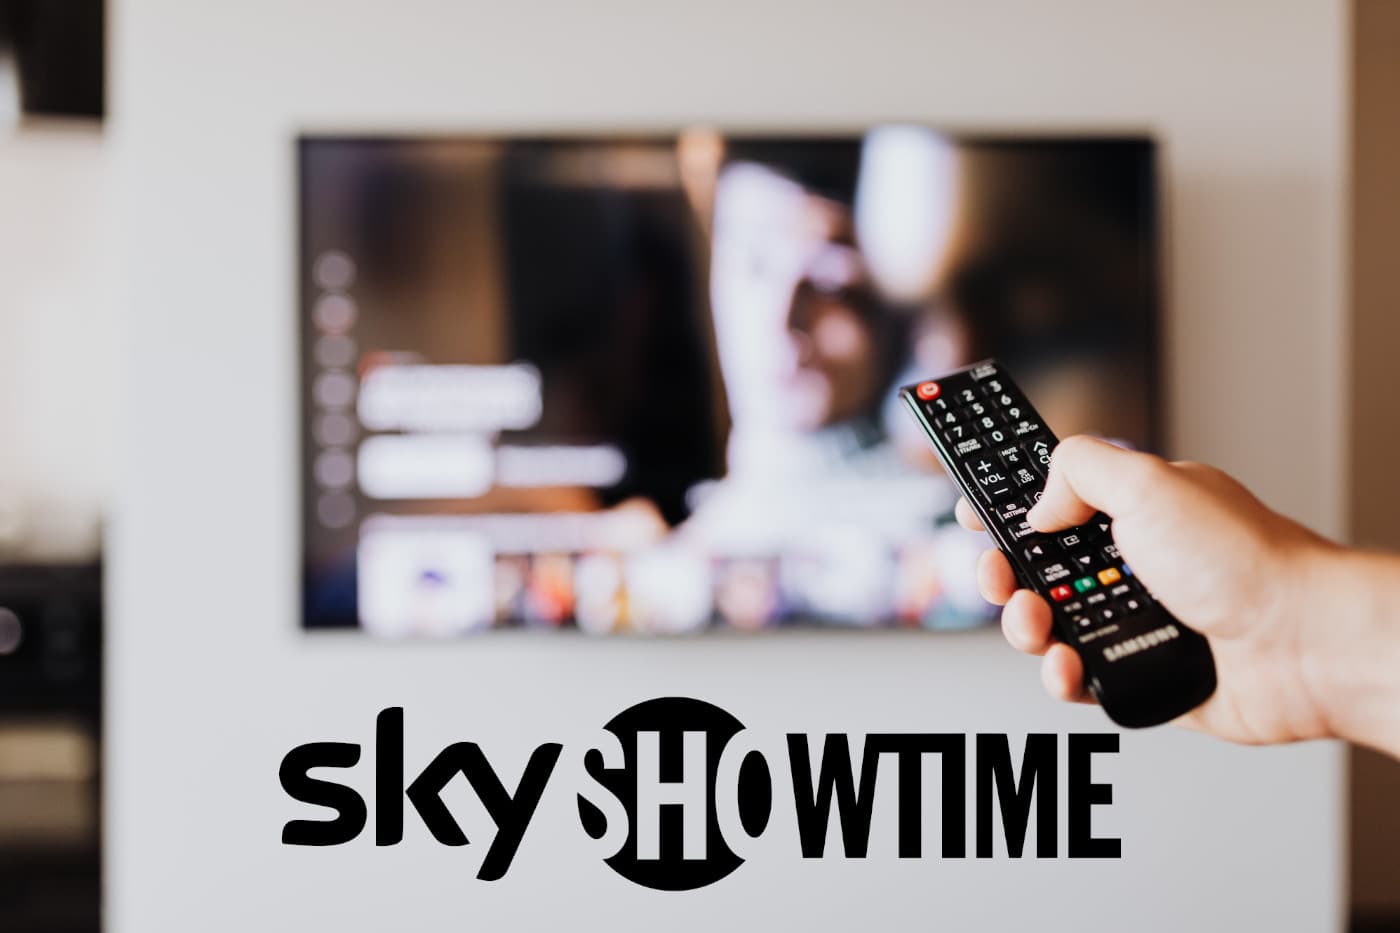 SkyShowtime pris: Slik får du lavest pris på SkyShowtime Norge